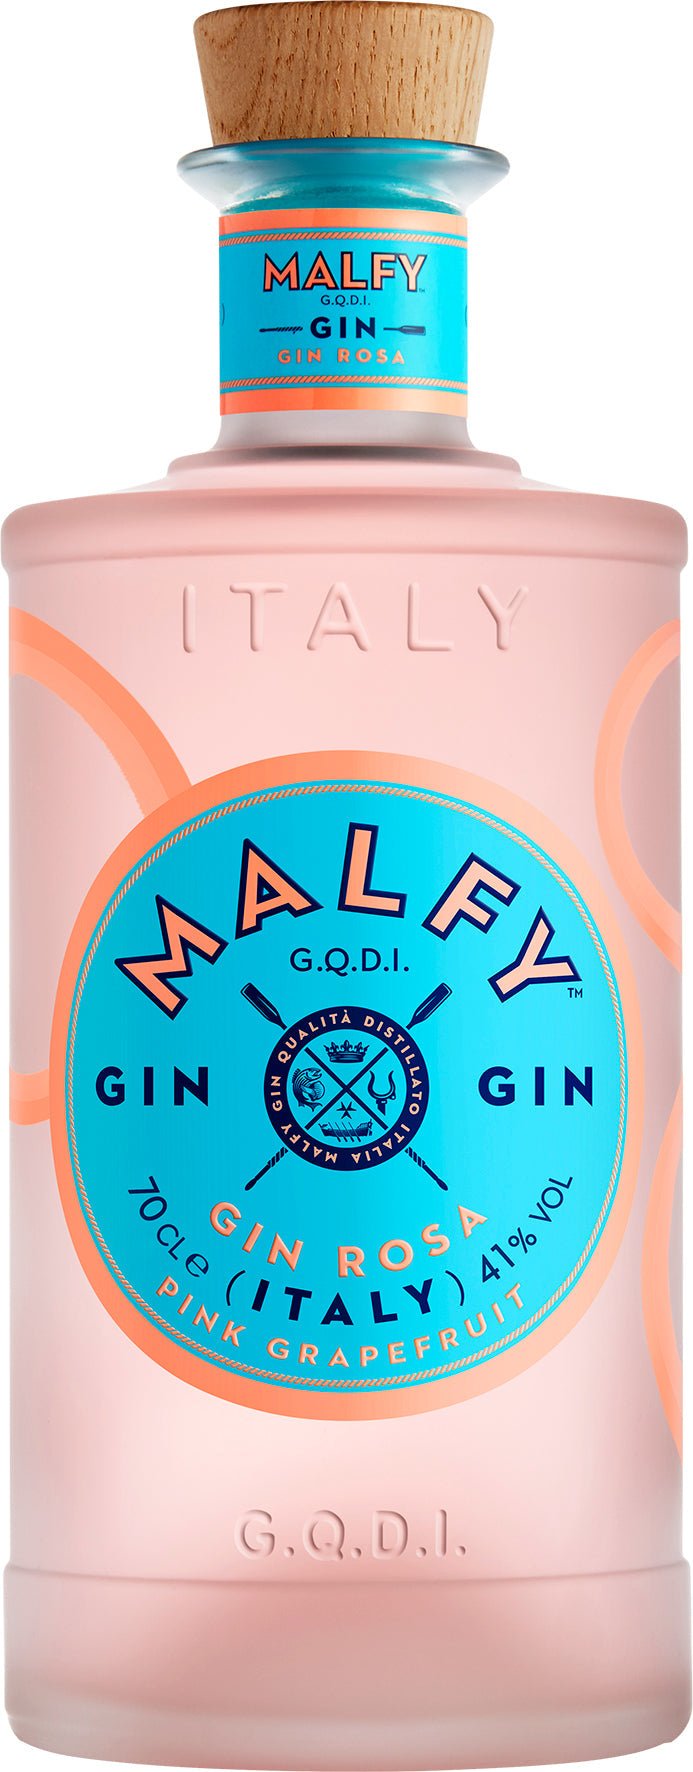 Malfy Gin Rosa 41% 0,7 ltr. - AllSpirits